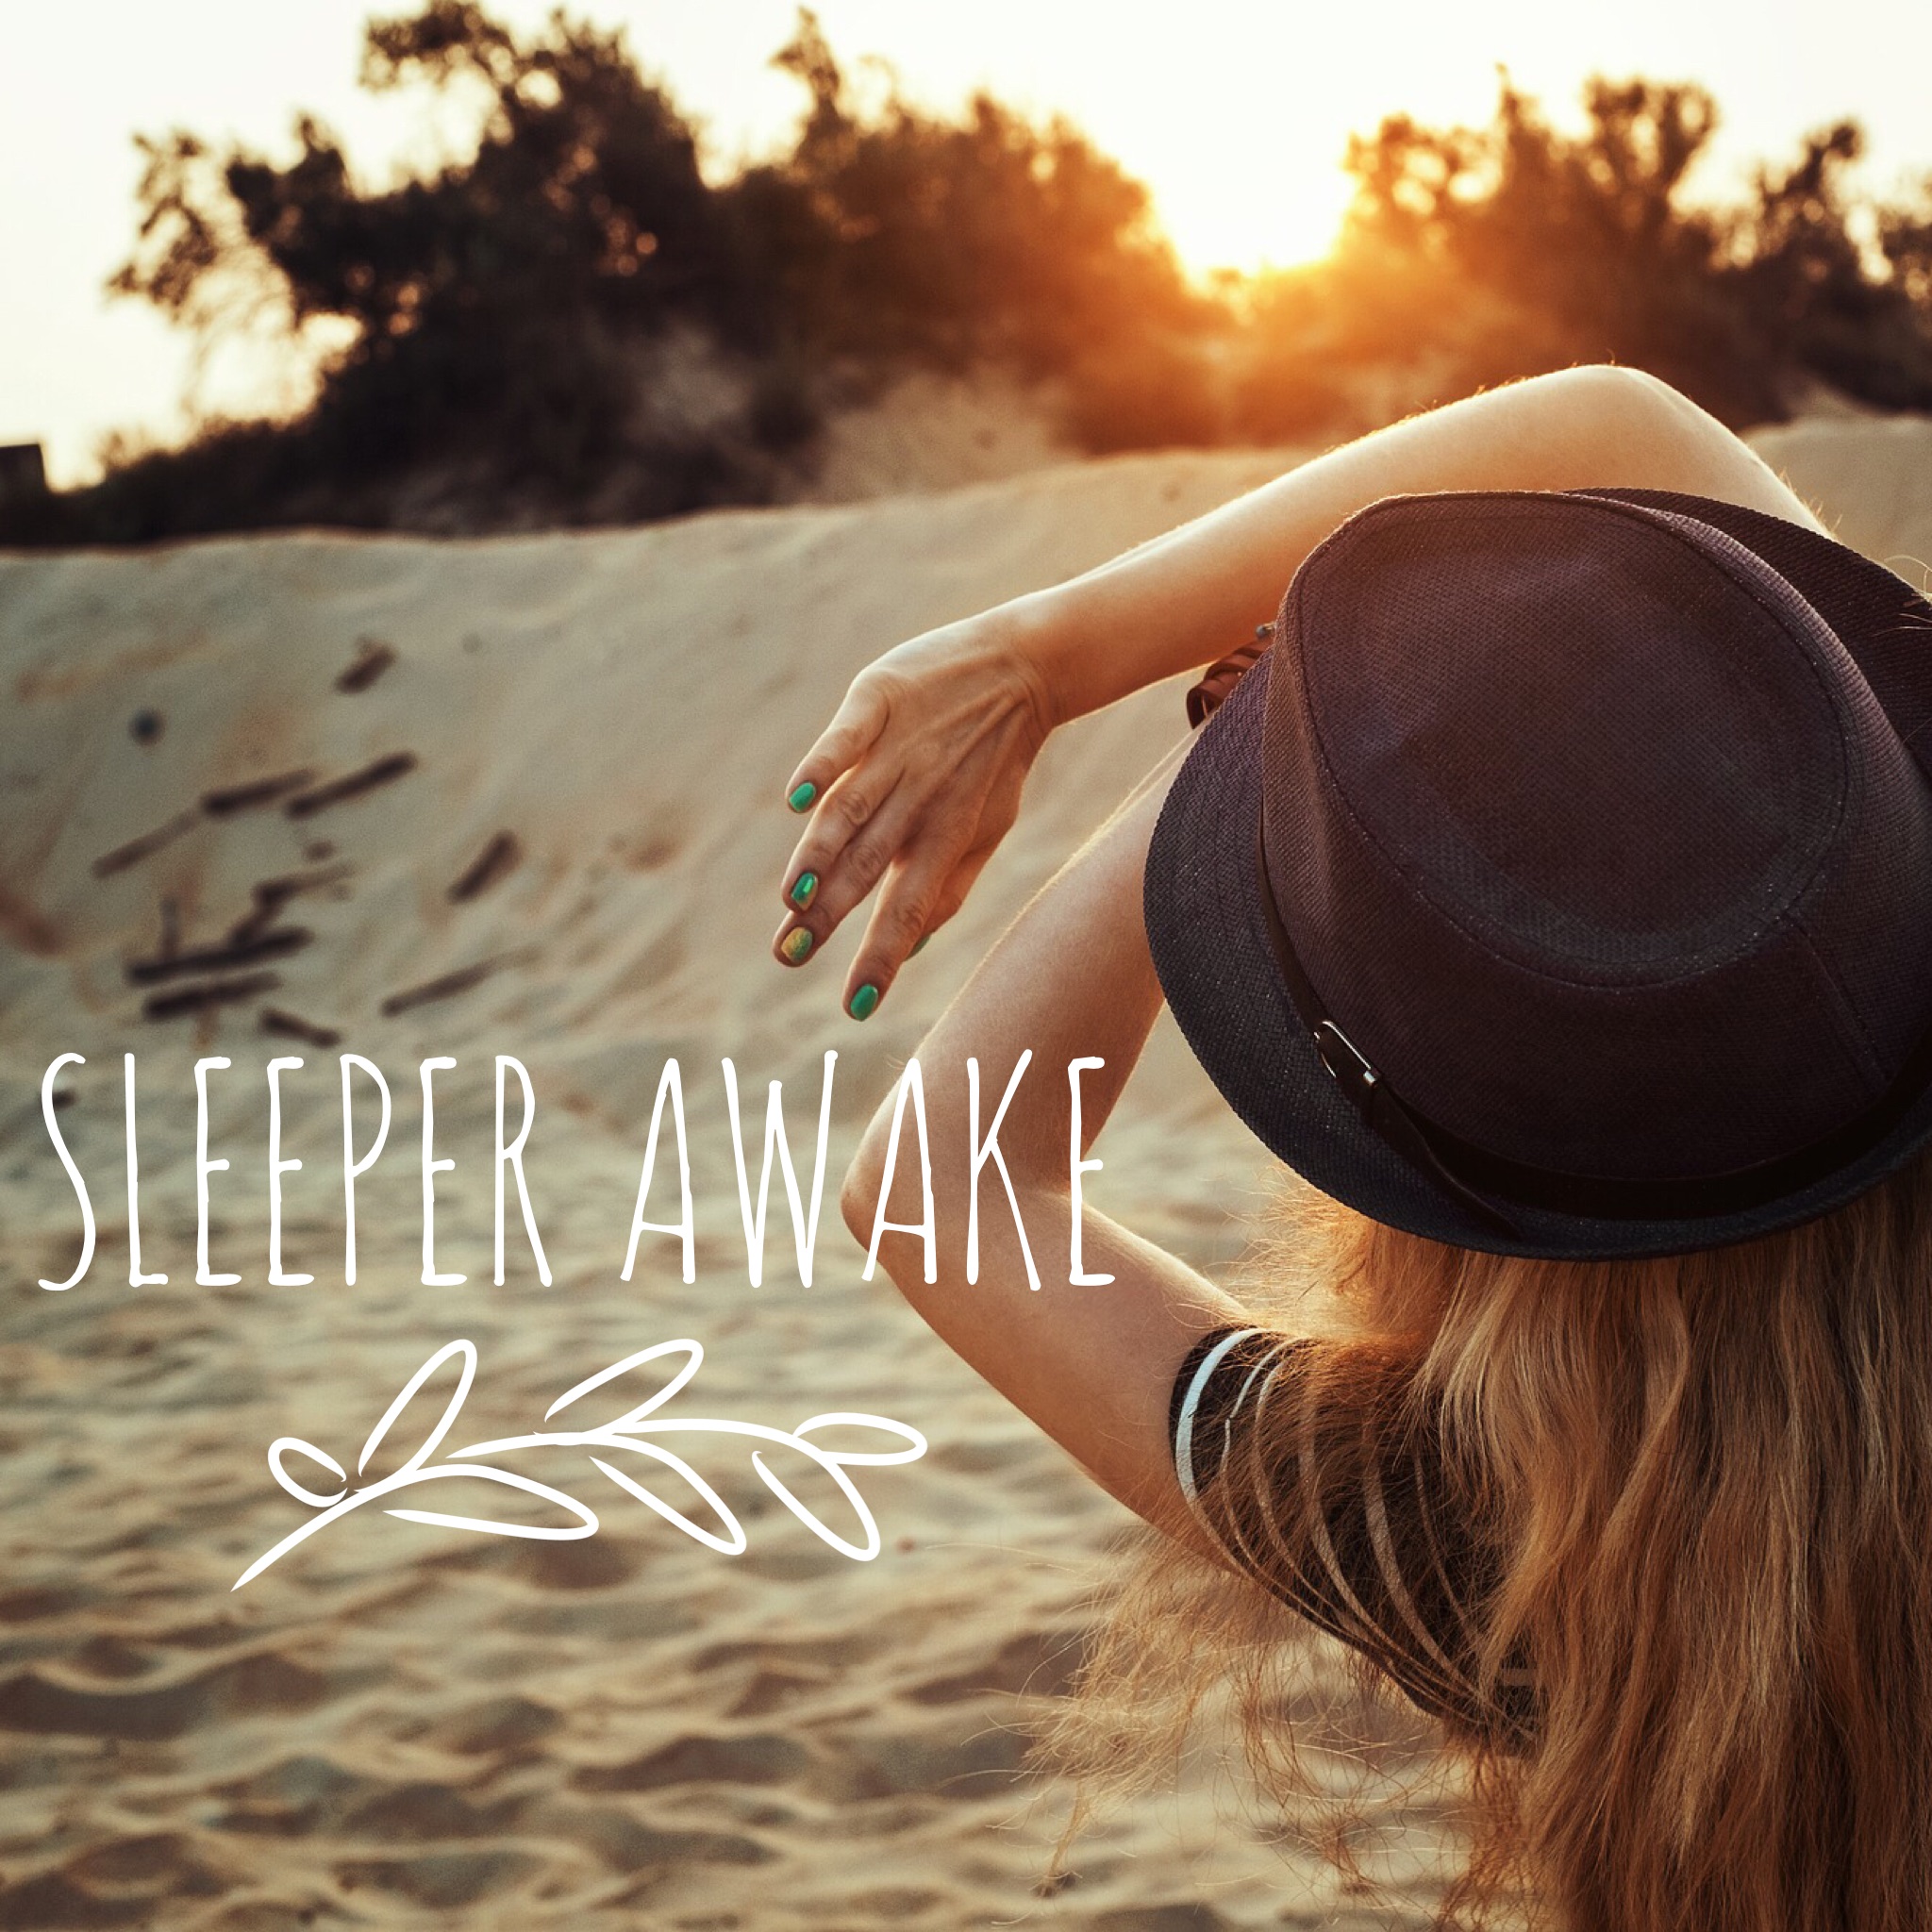 Sleeper Awake!